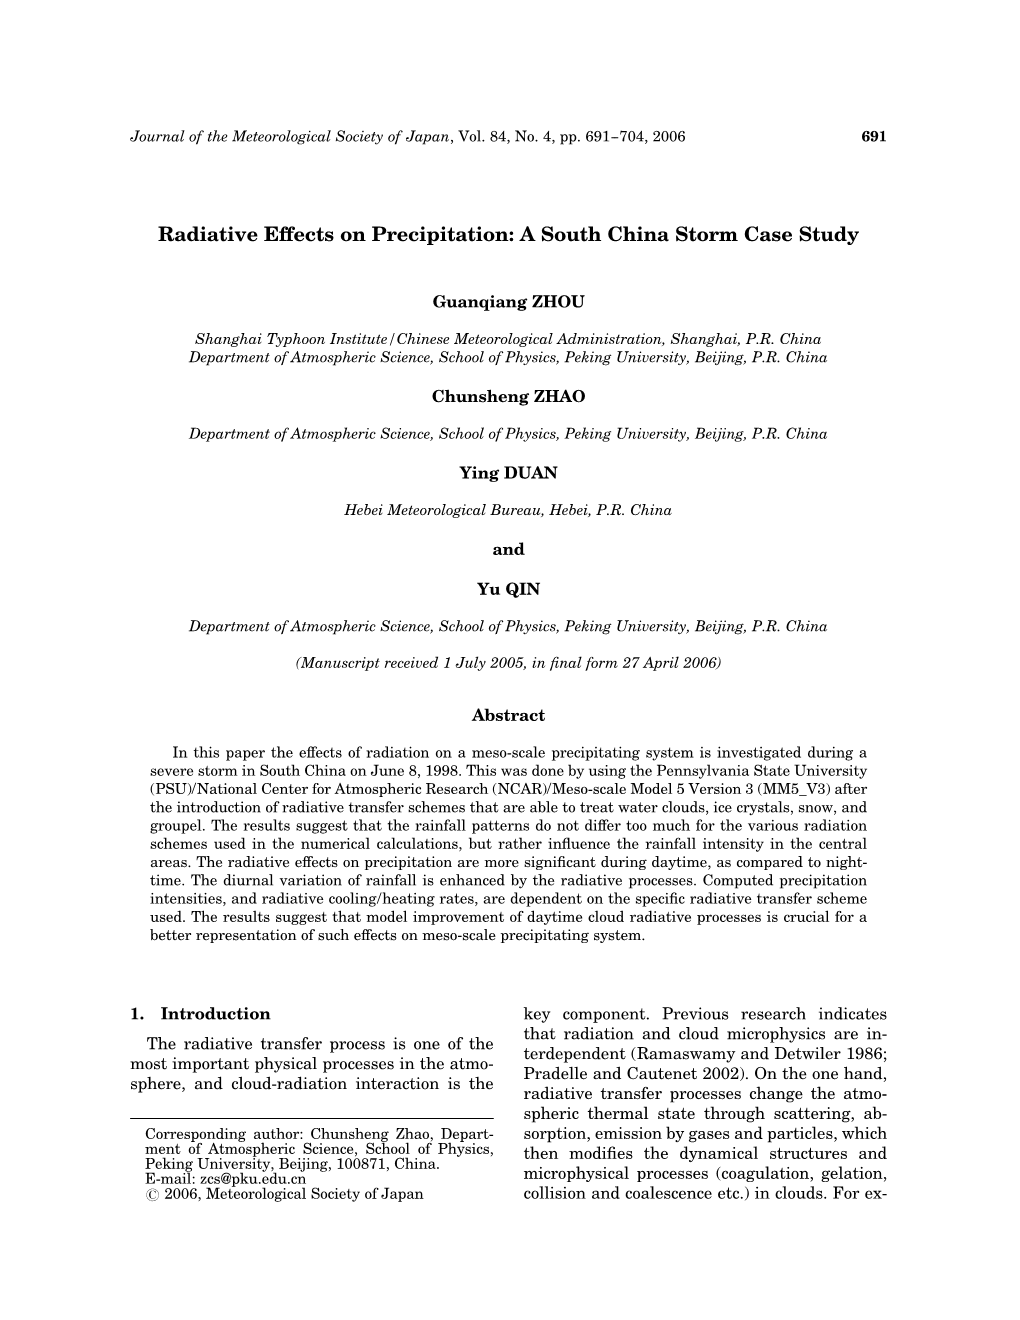 Radiative Effects on Precipitation: a South China Storm Case Study